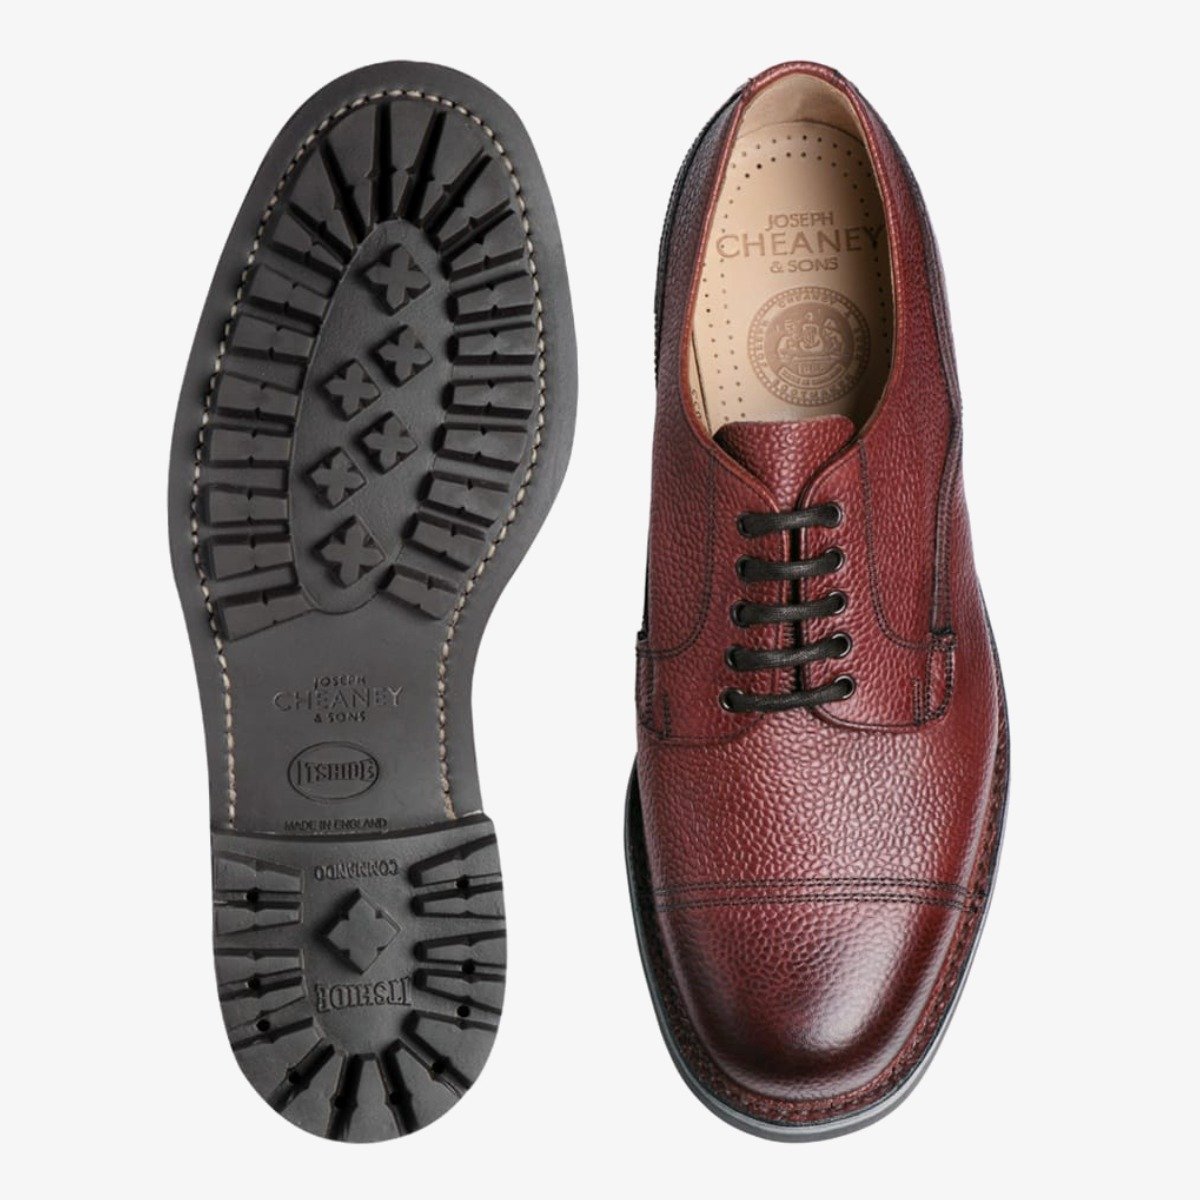 Cheaney Cairngorm II burgundy toe cap men's blucher shoes